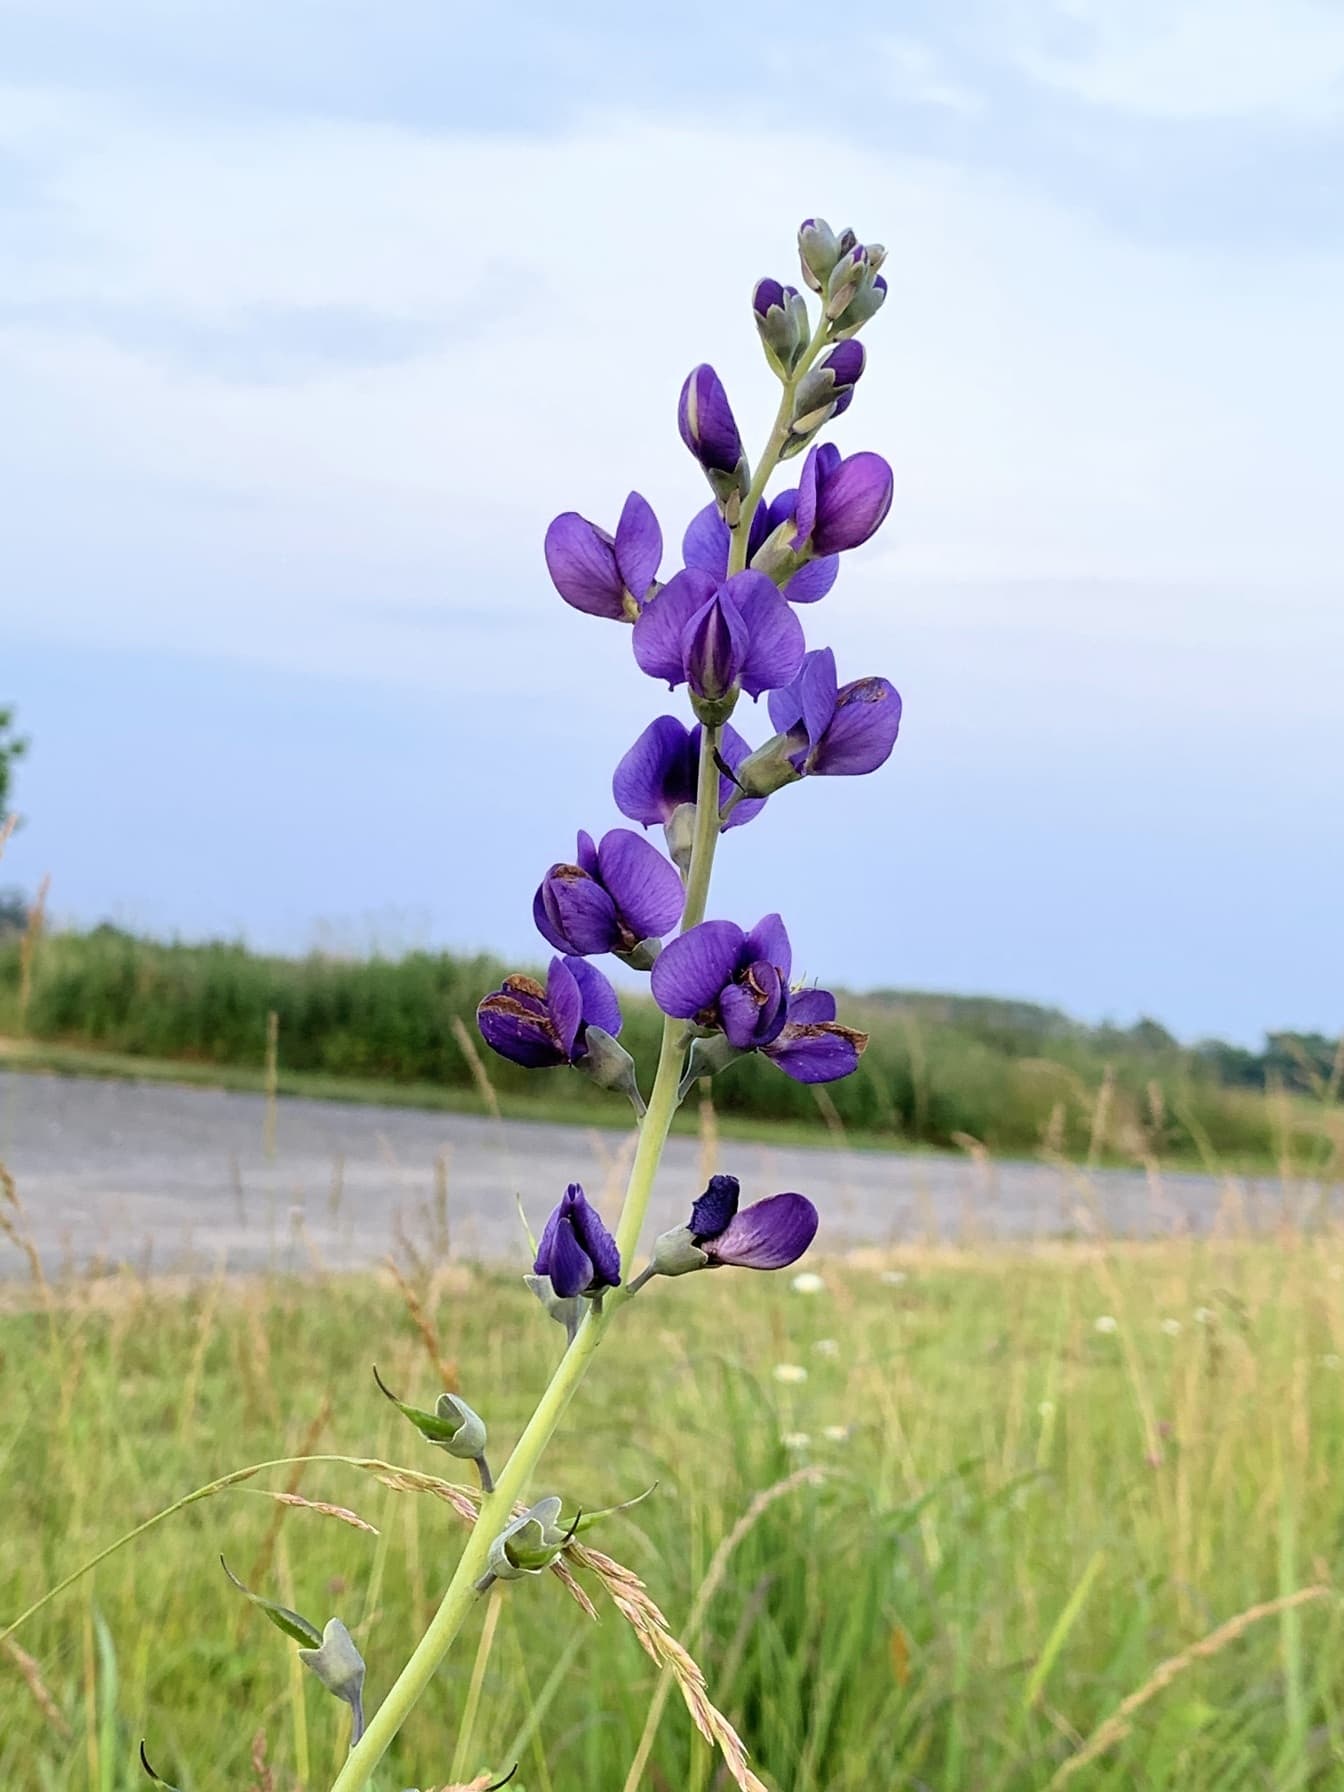 Falso índigo (Baptisia) flor silvestre púrpura de cerca en el prado